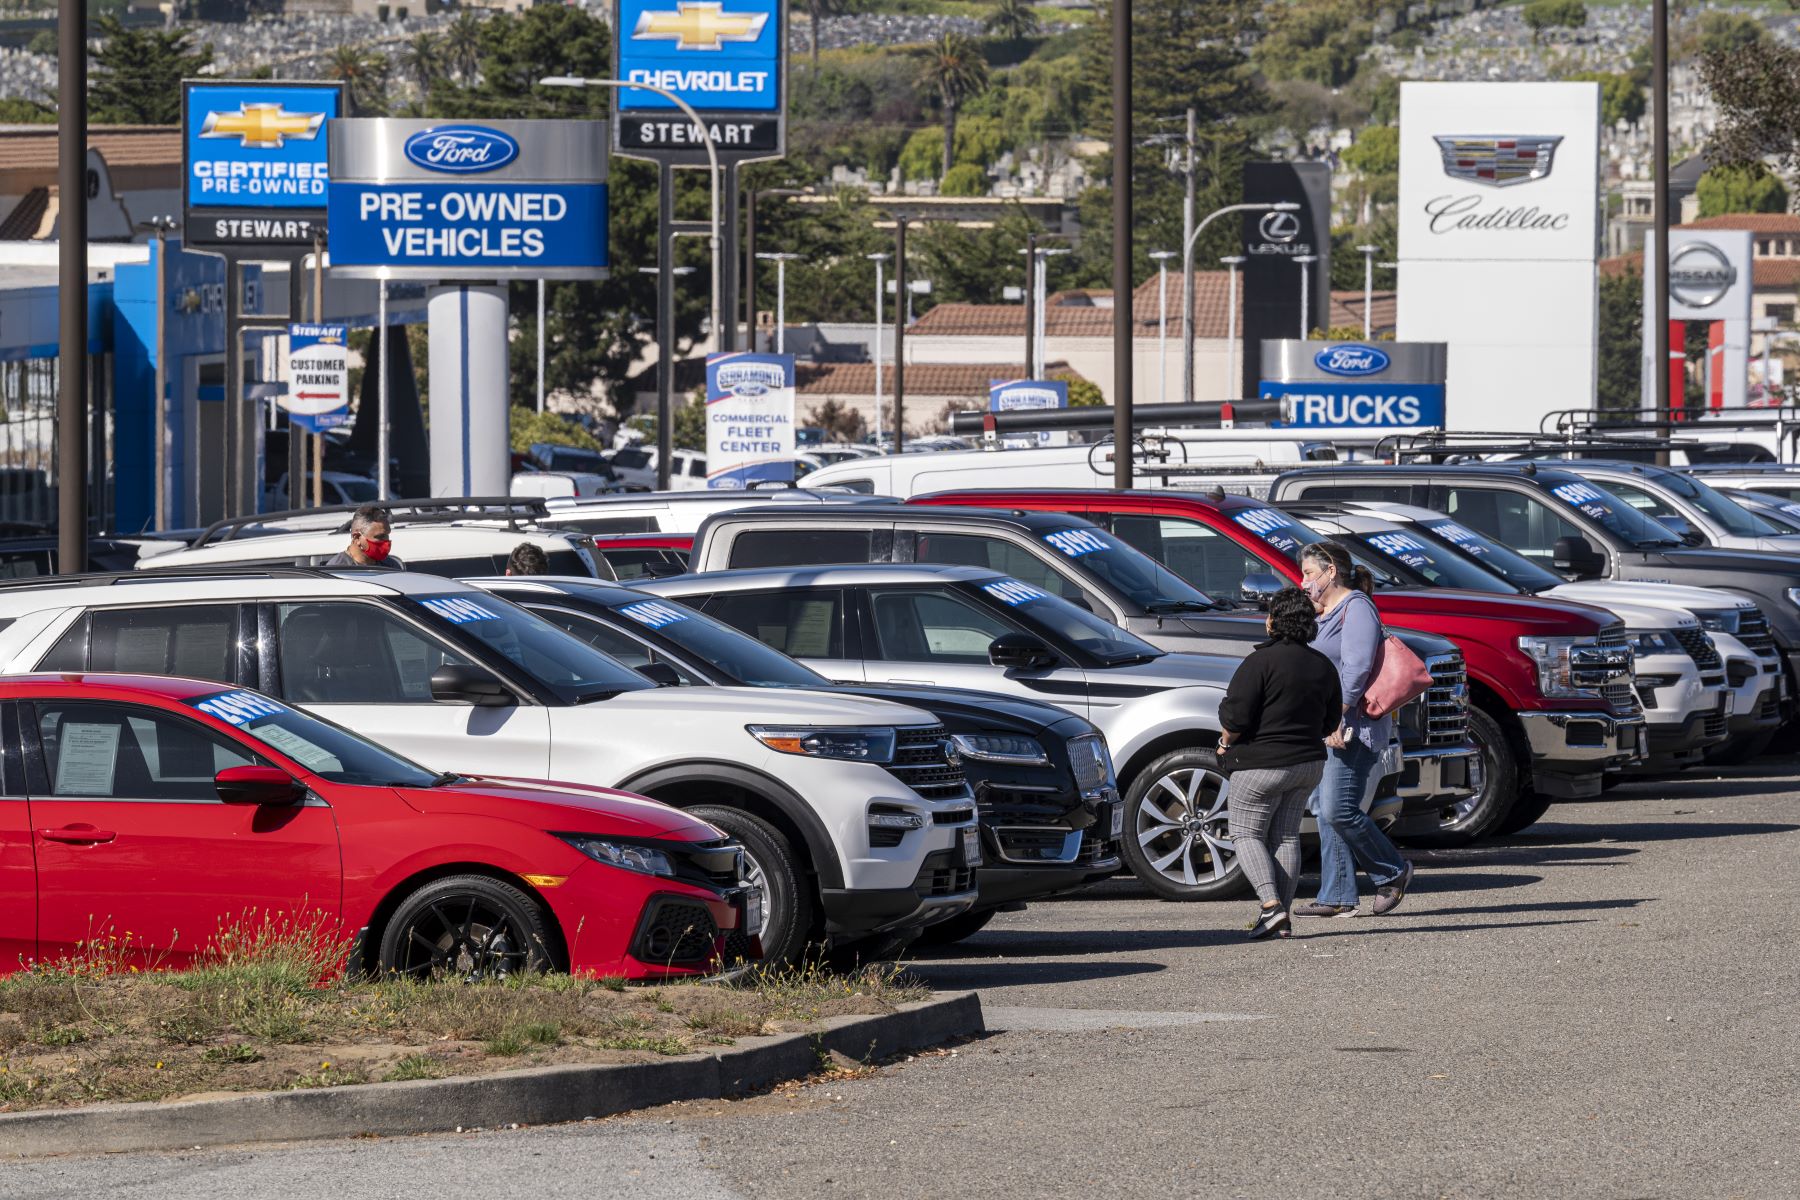 Car shoppers roaming Ford and Cadillac car sales dealerships in Colma, California